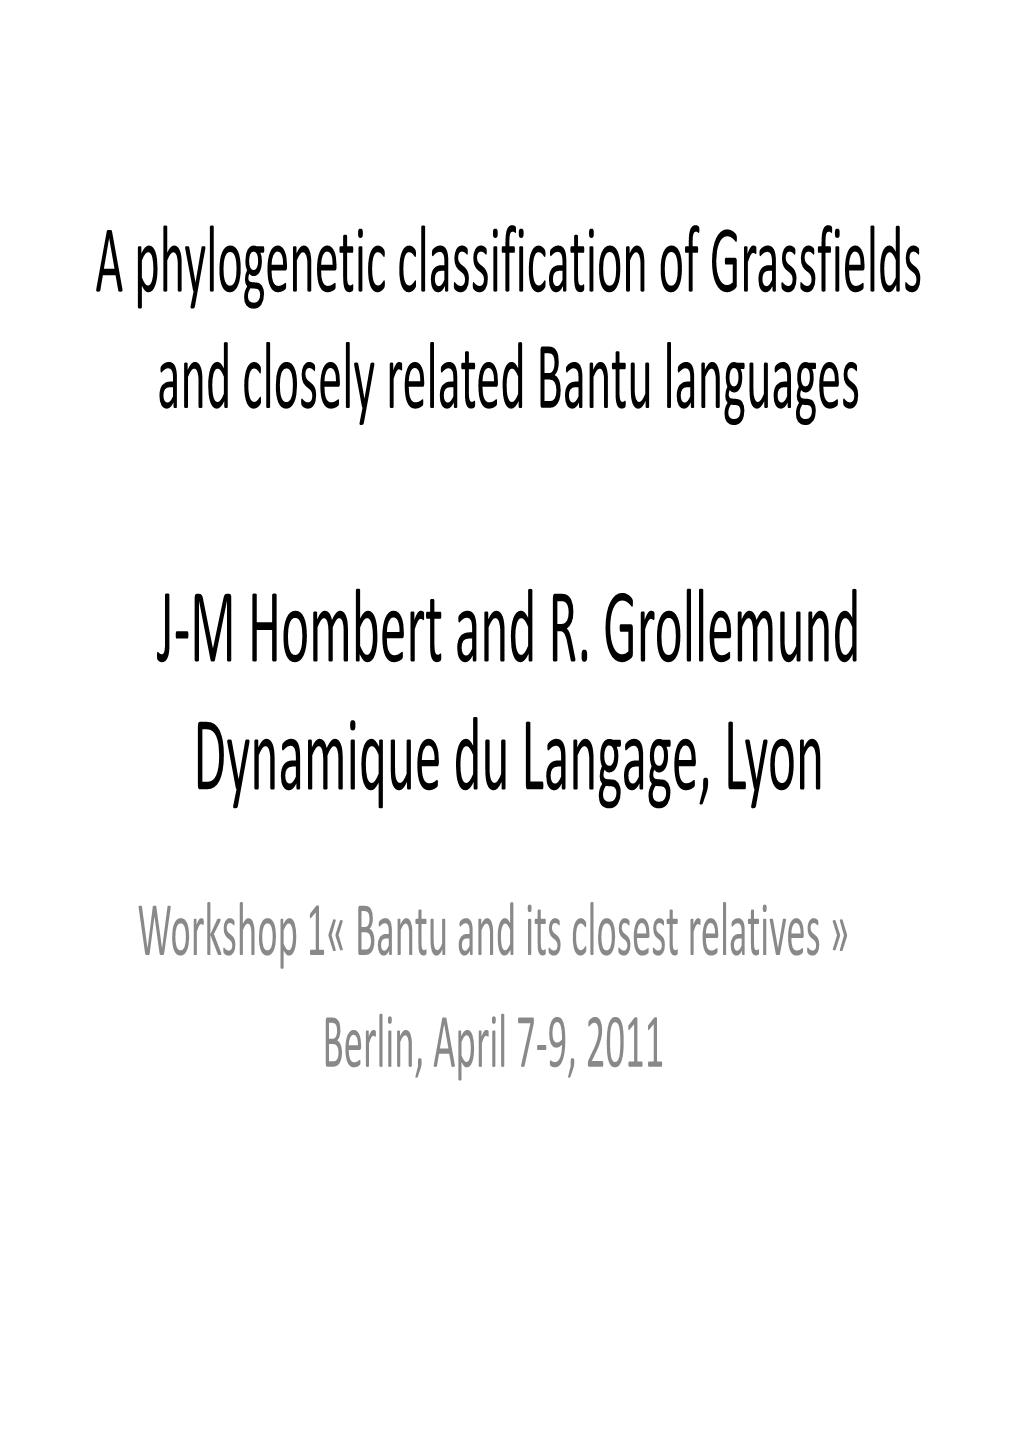 J-M Hombert and R. Grollemund Dynamique Du Langage, Lyon